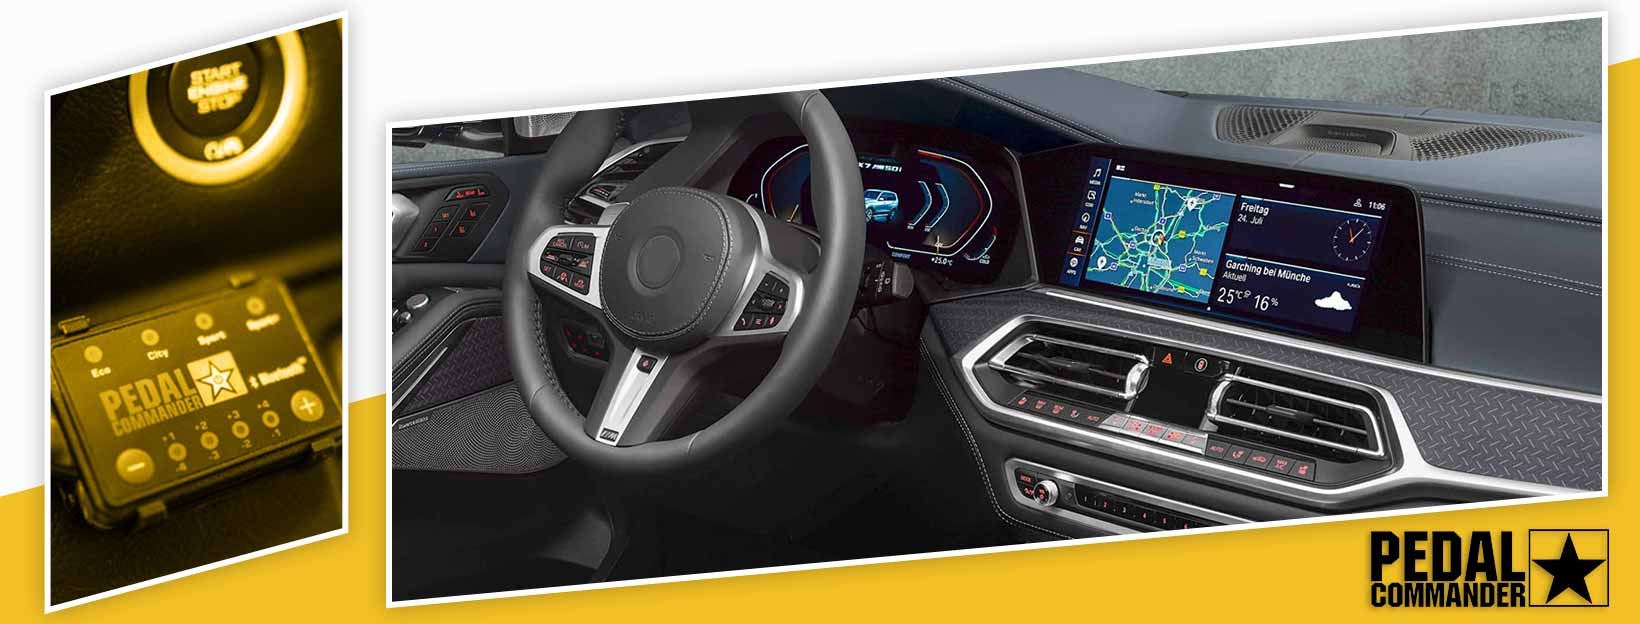 Pedal Commander for BMW X7 - interior